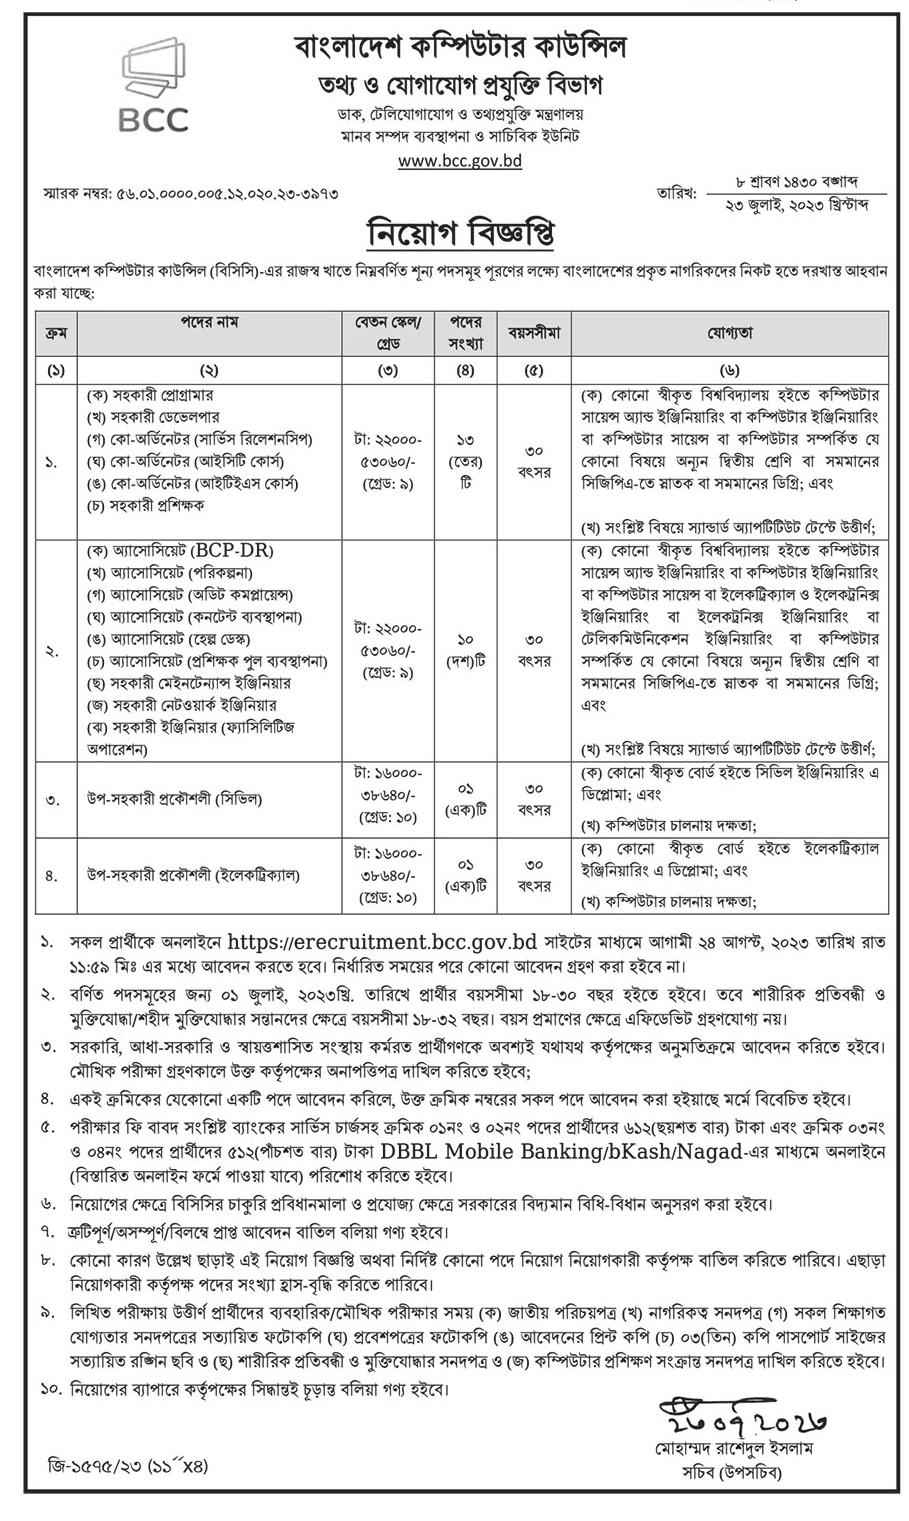 ICT Job Offers in Bangladesh